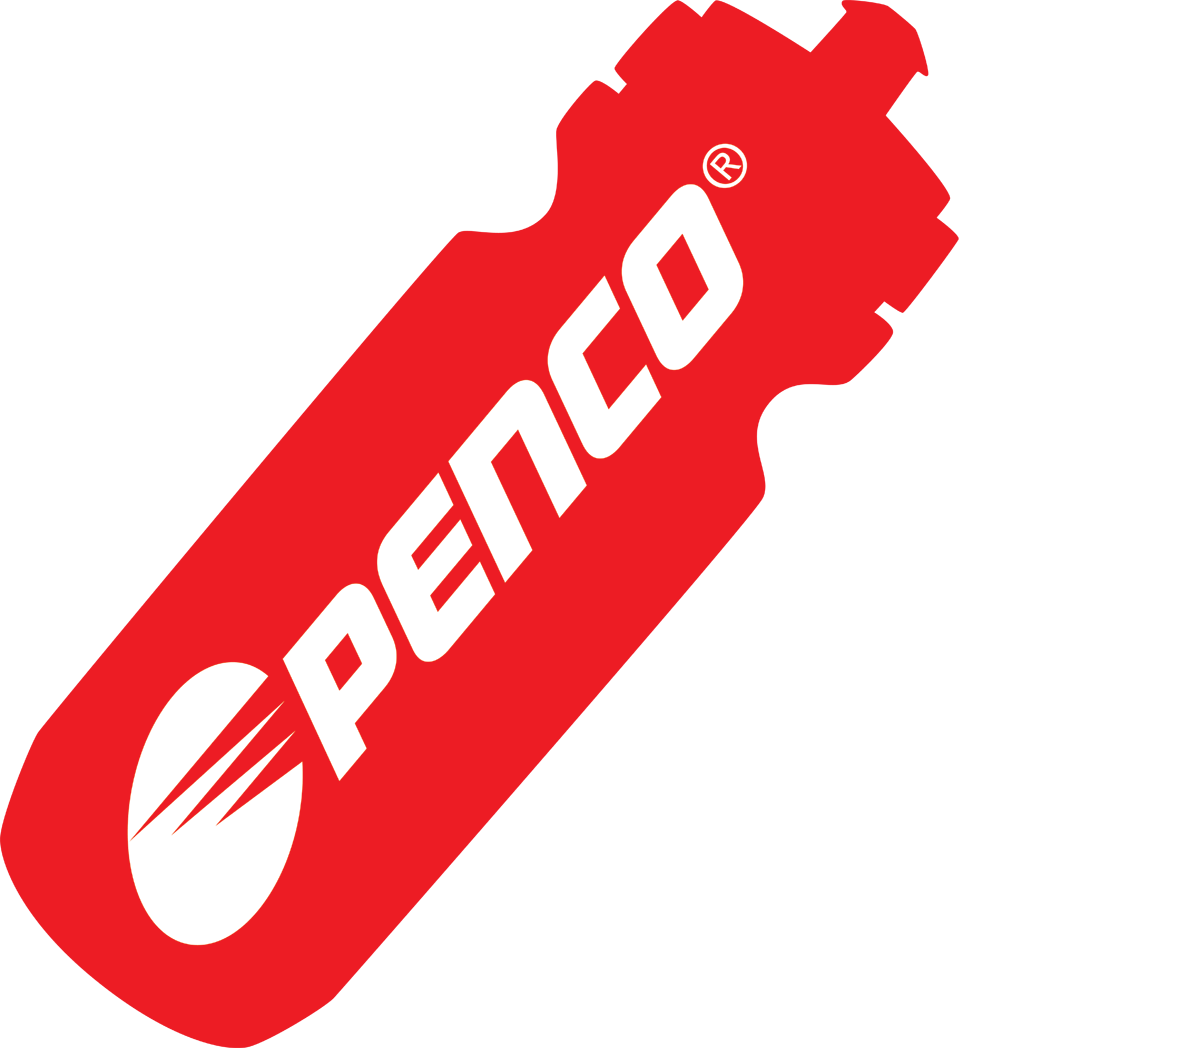 logo-PENCO-YOUR-FUEL-_2018-